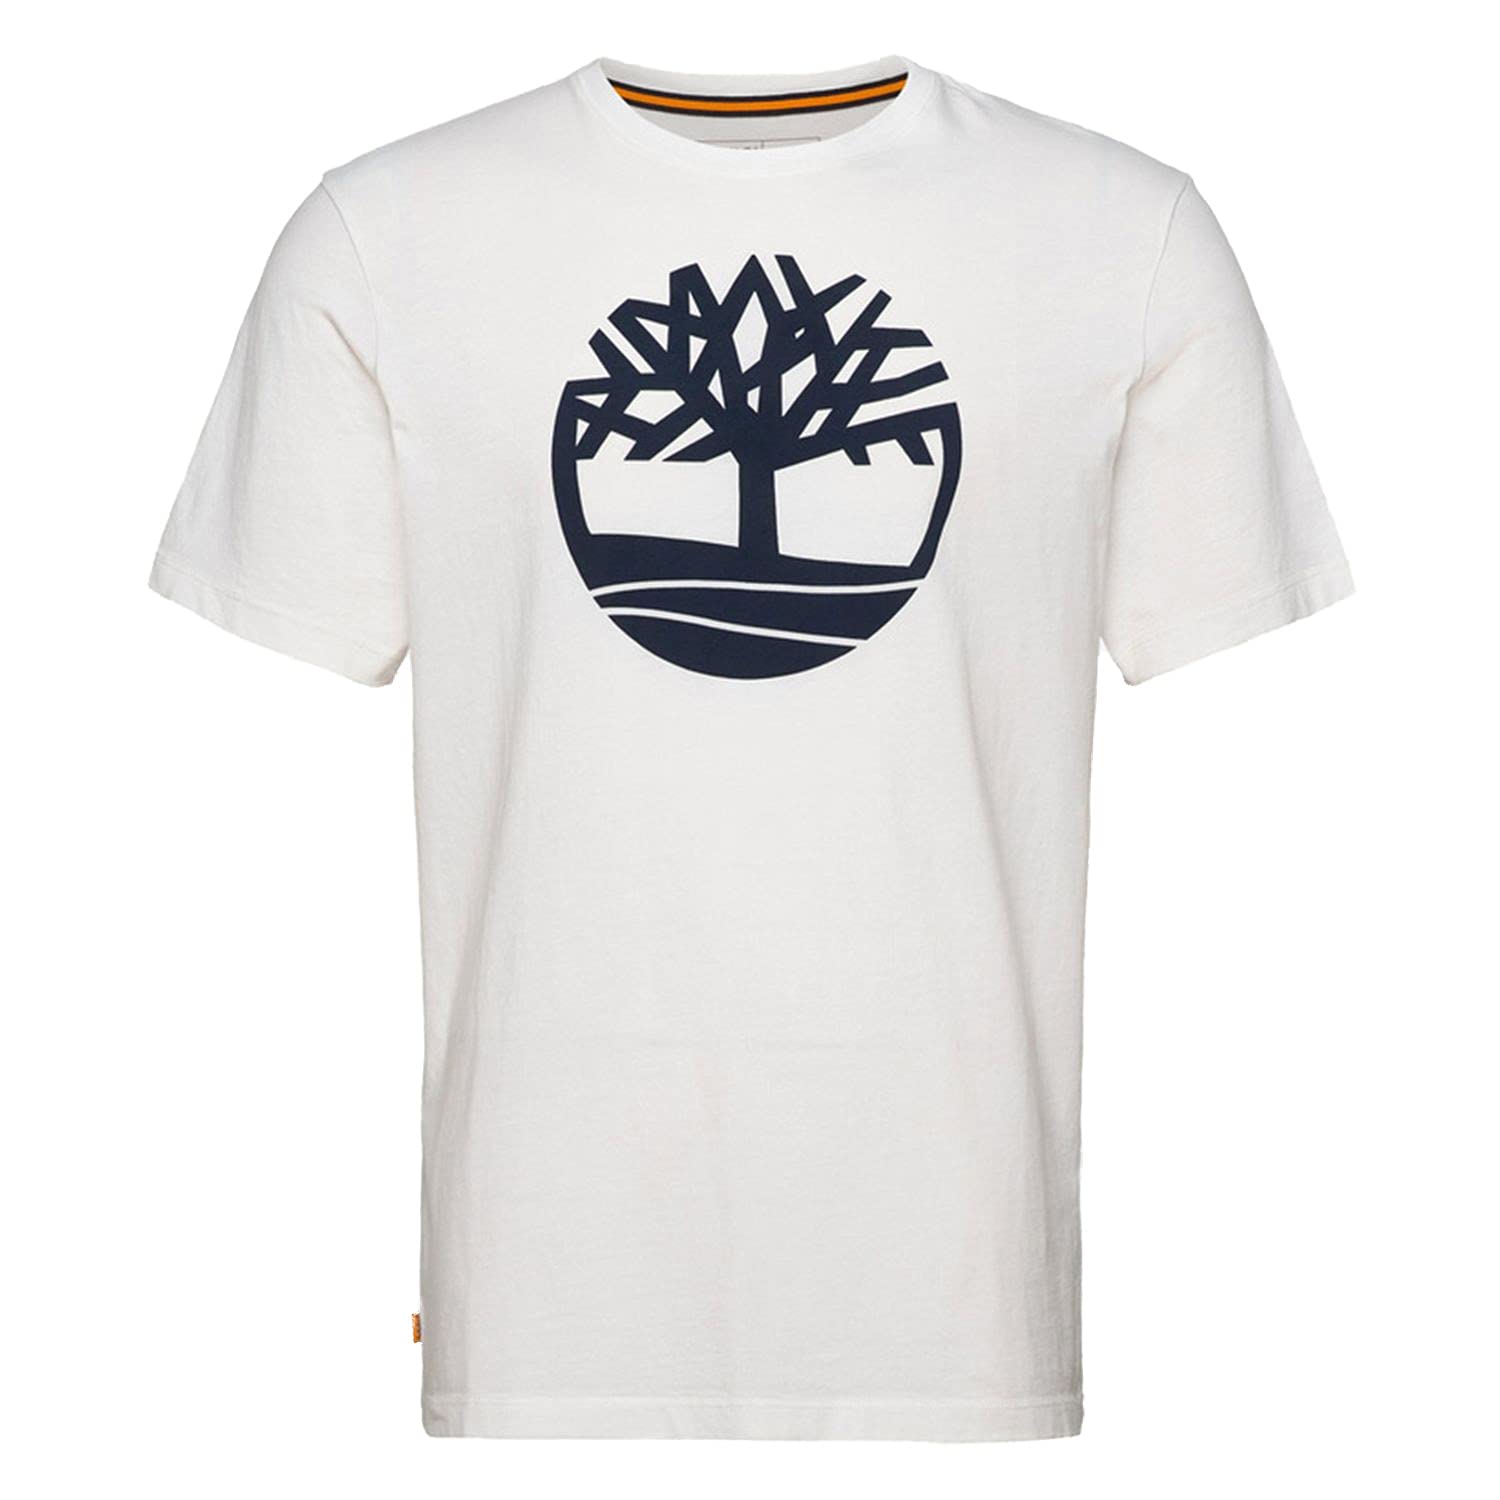 vente chaude Timberland T- Shirt à Manches Courtes Homme MRn0g5X7p mode